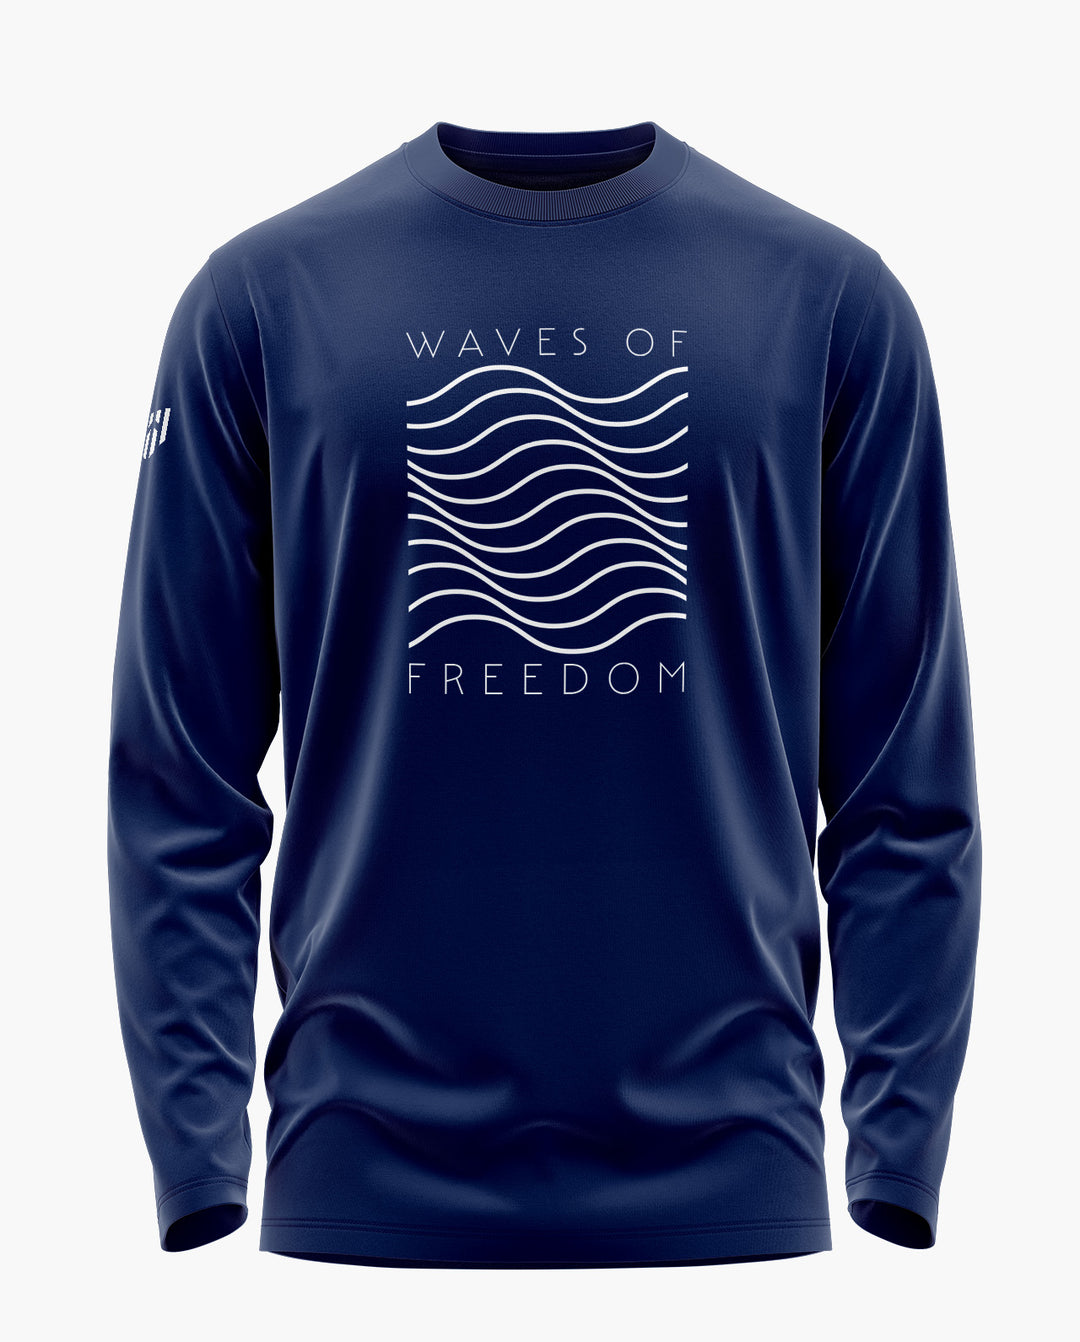 Waves Of Freedom Full Sleeve T-Shirt